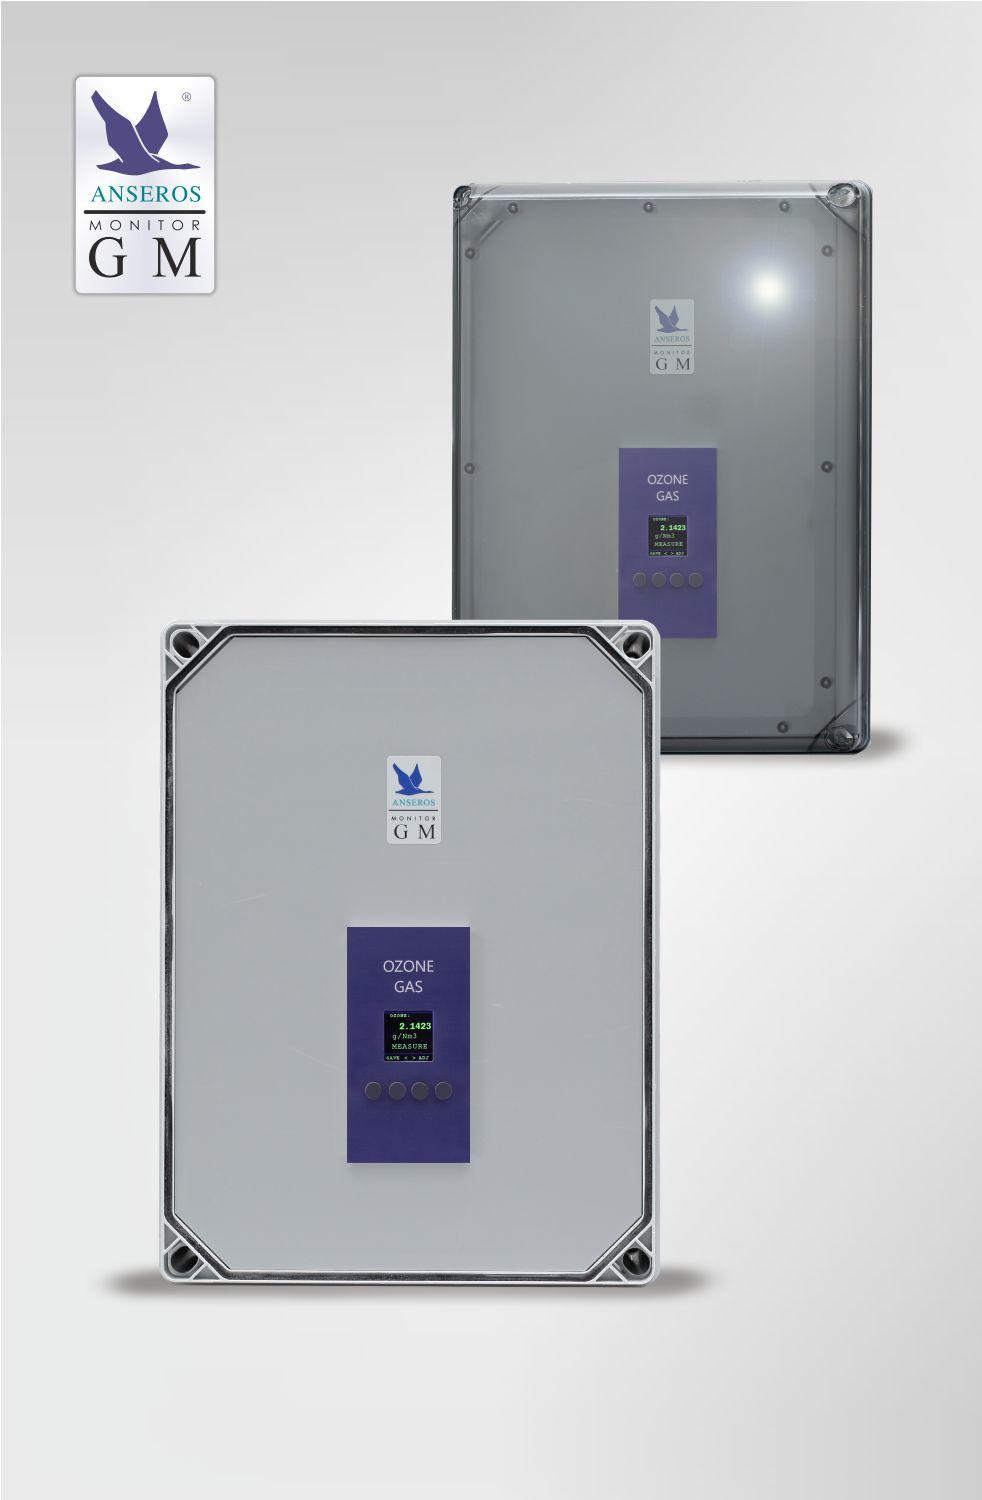 Product ANSEROS Ozone Gas Analyzer GM-6000-SC (Wall mount) image